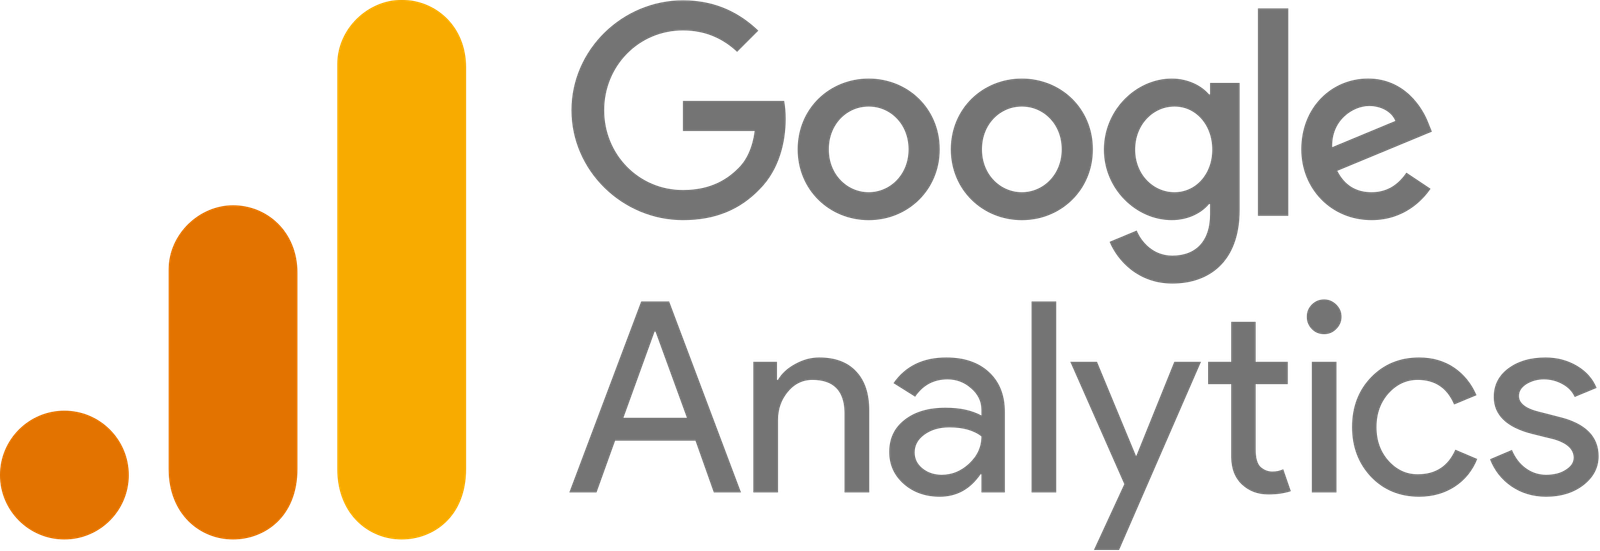 Snapshot of Google Analytics Dashboard - Website Analytics and User Behavior Insights